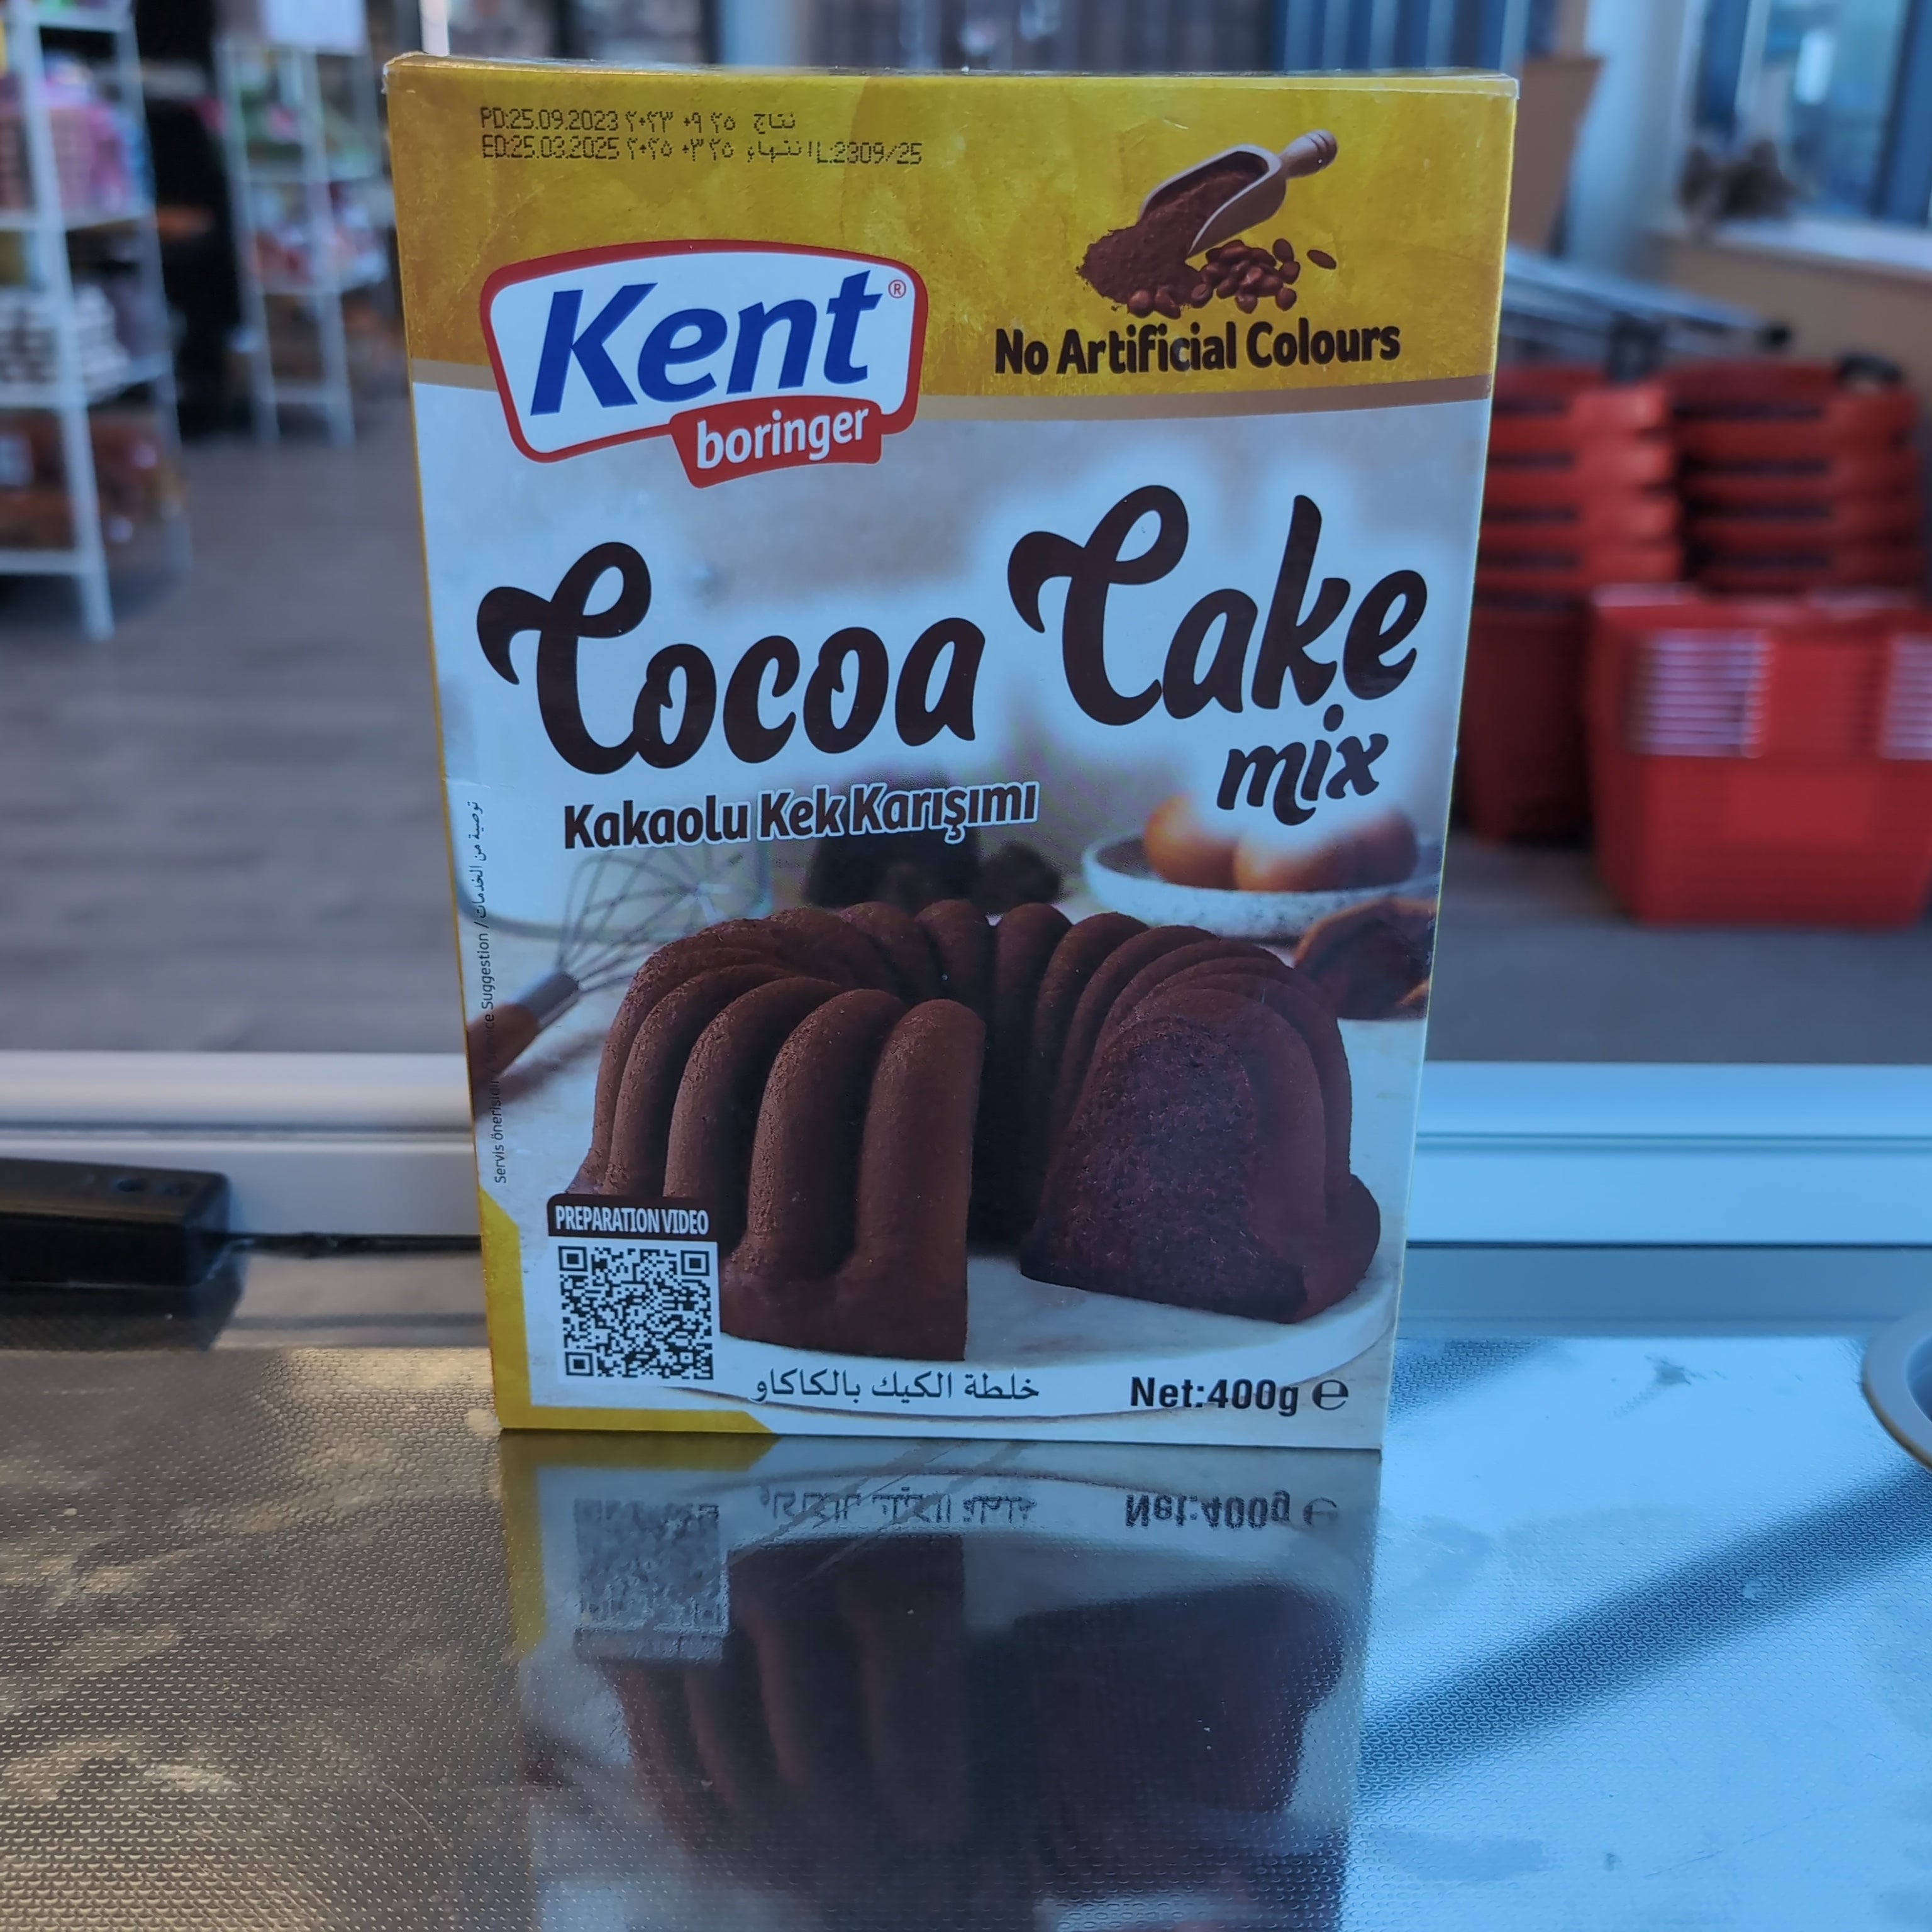 Kent Boringer Cacao Cakemix 400g